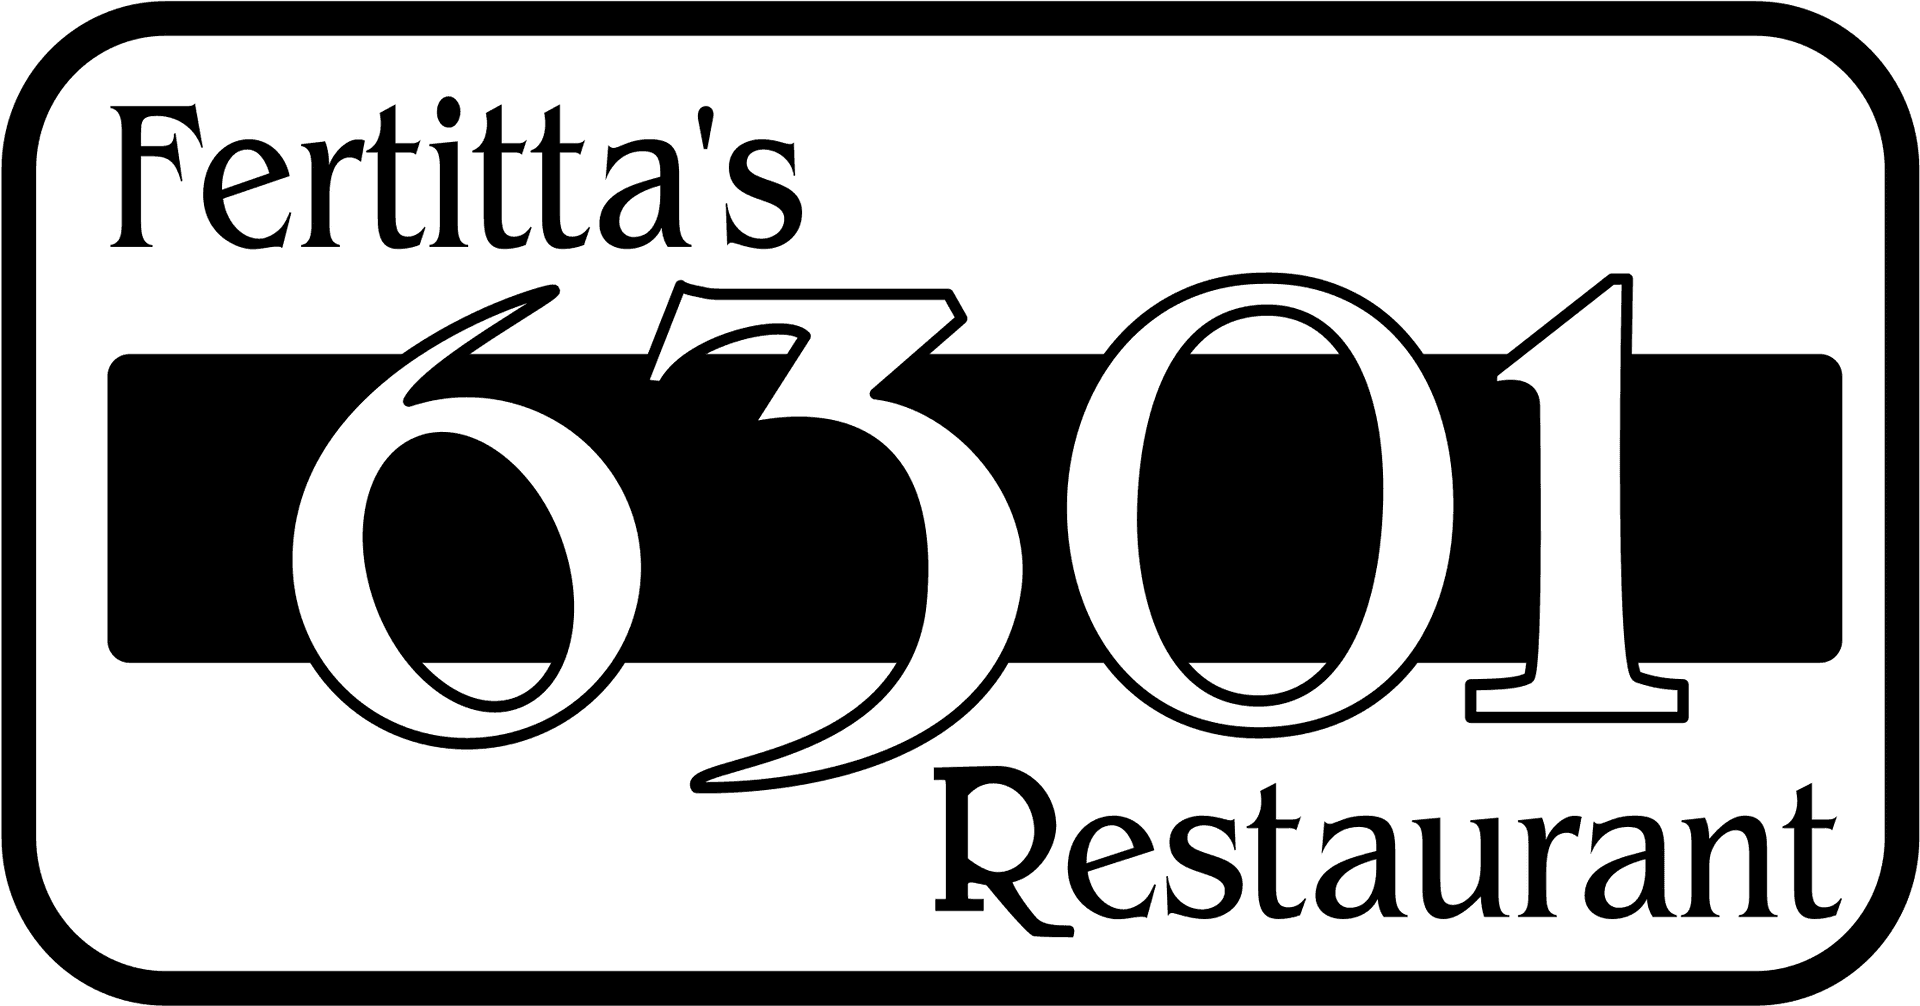 Fertittas6301 Restaurant Logo PNG